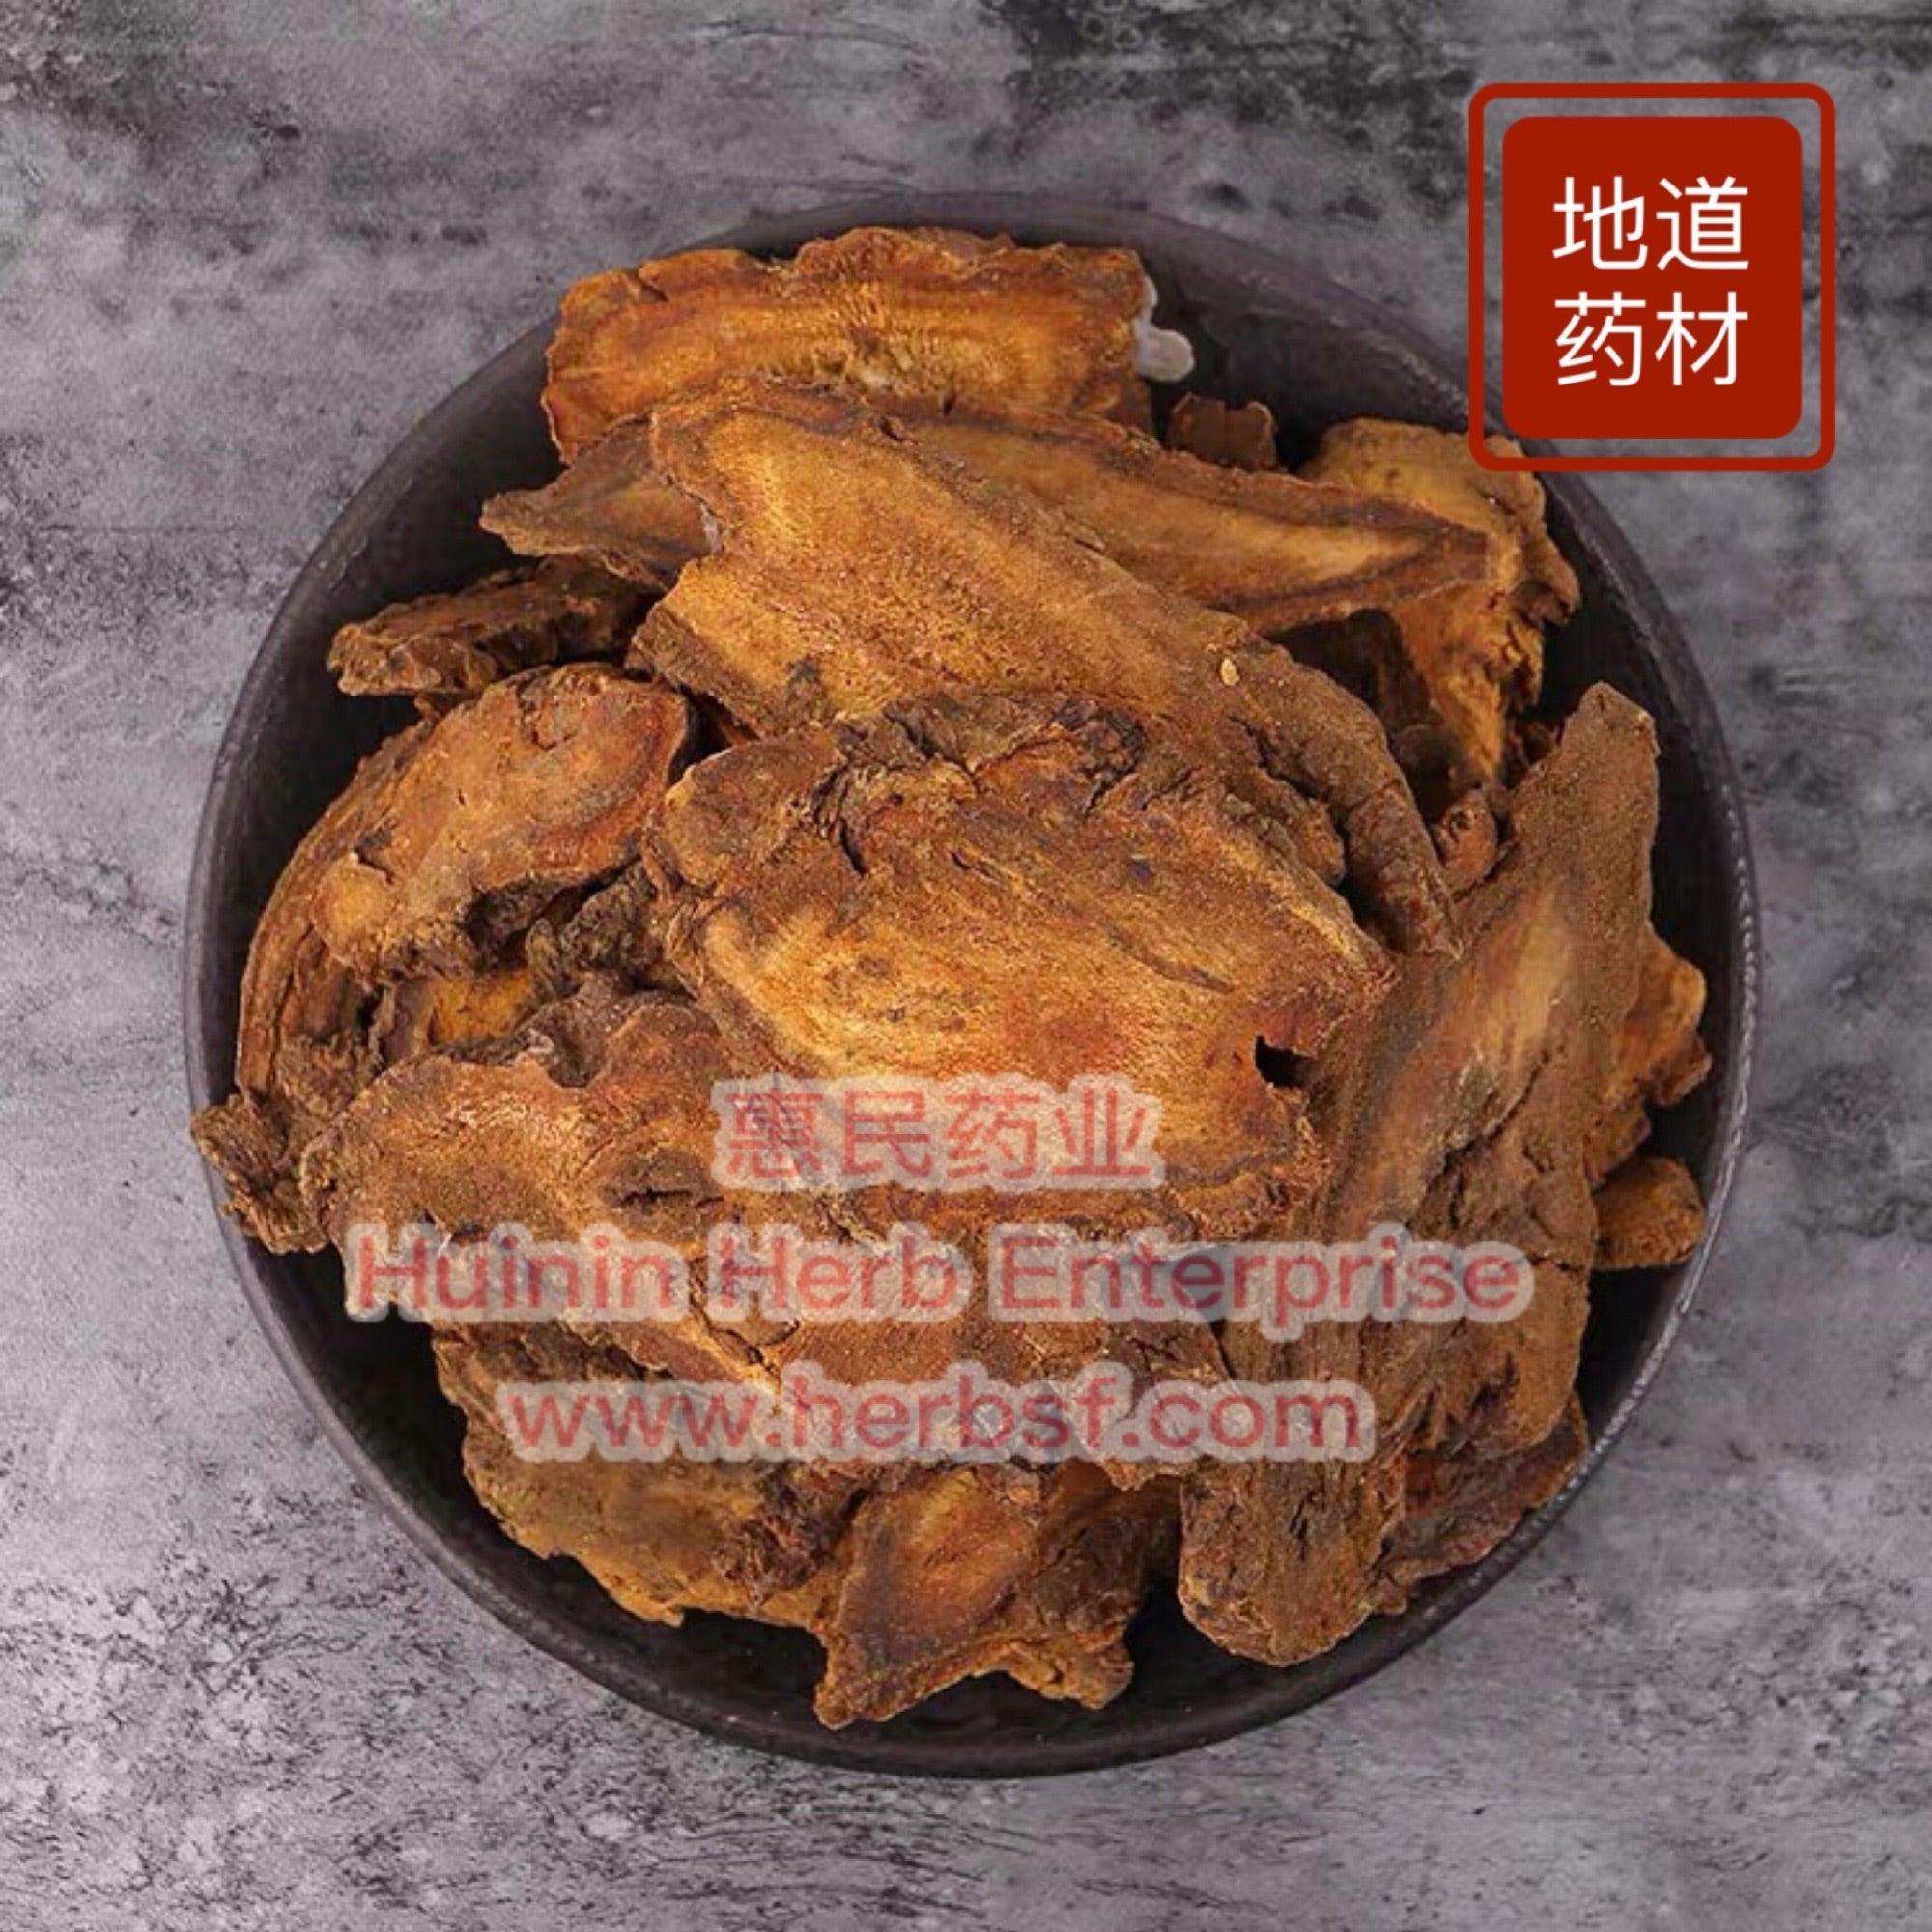 Da Huang 4oz - Huimin Herb Online, LLC